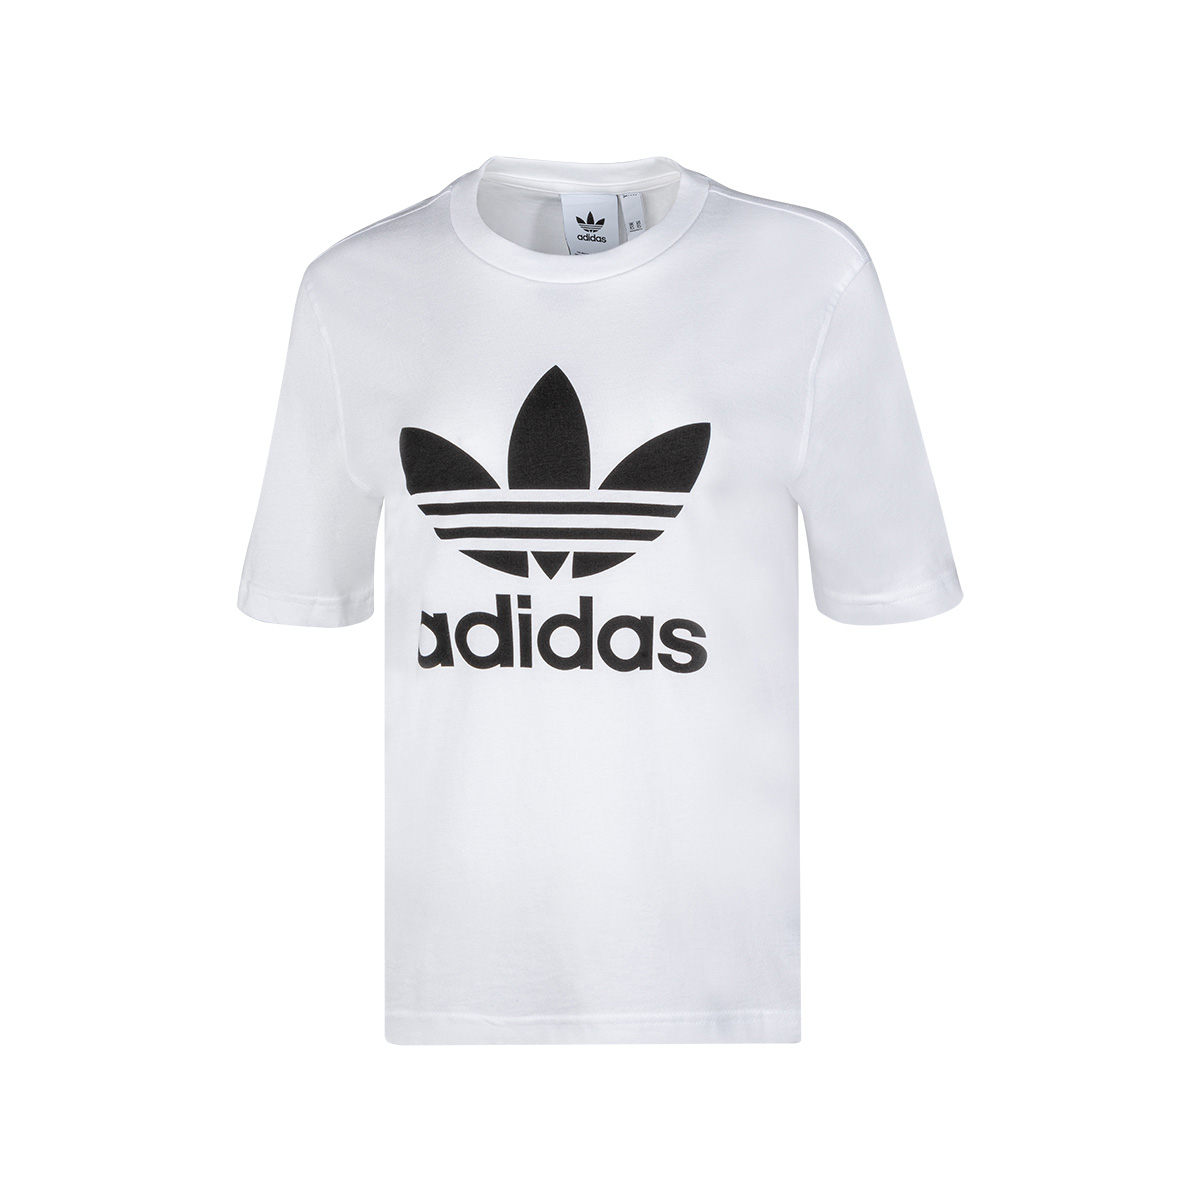 Buy Adidas Trefoil - Men's T-Shirt online | Foot Locker Kuwait